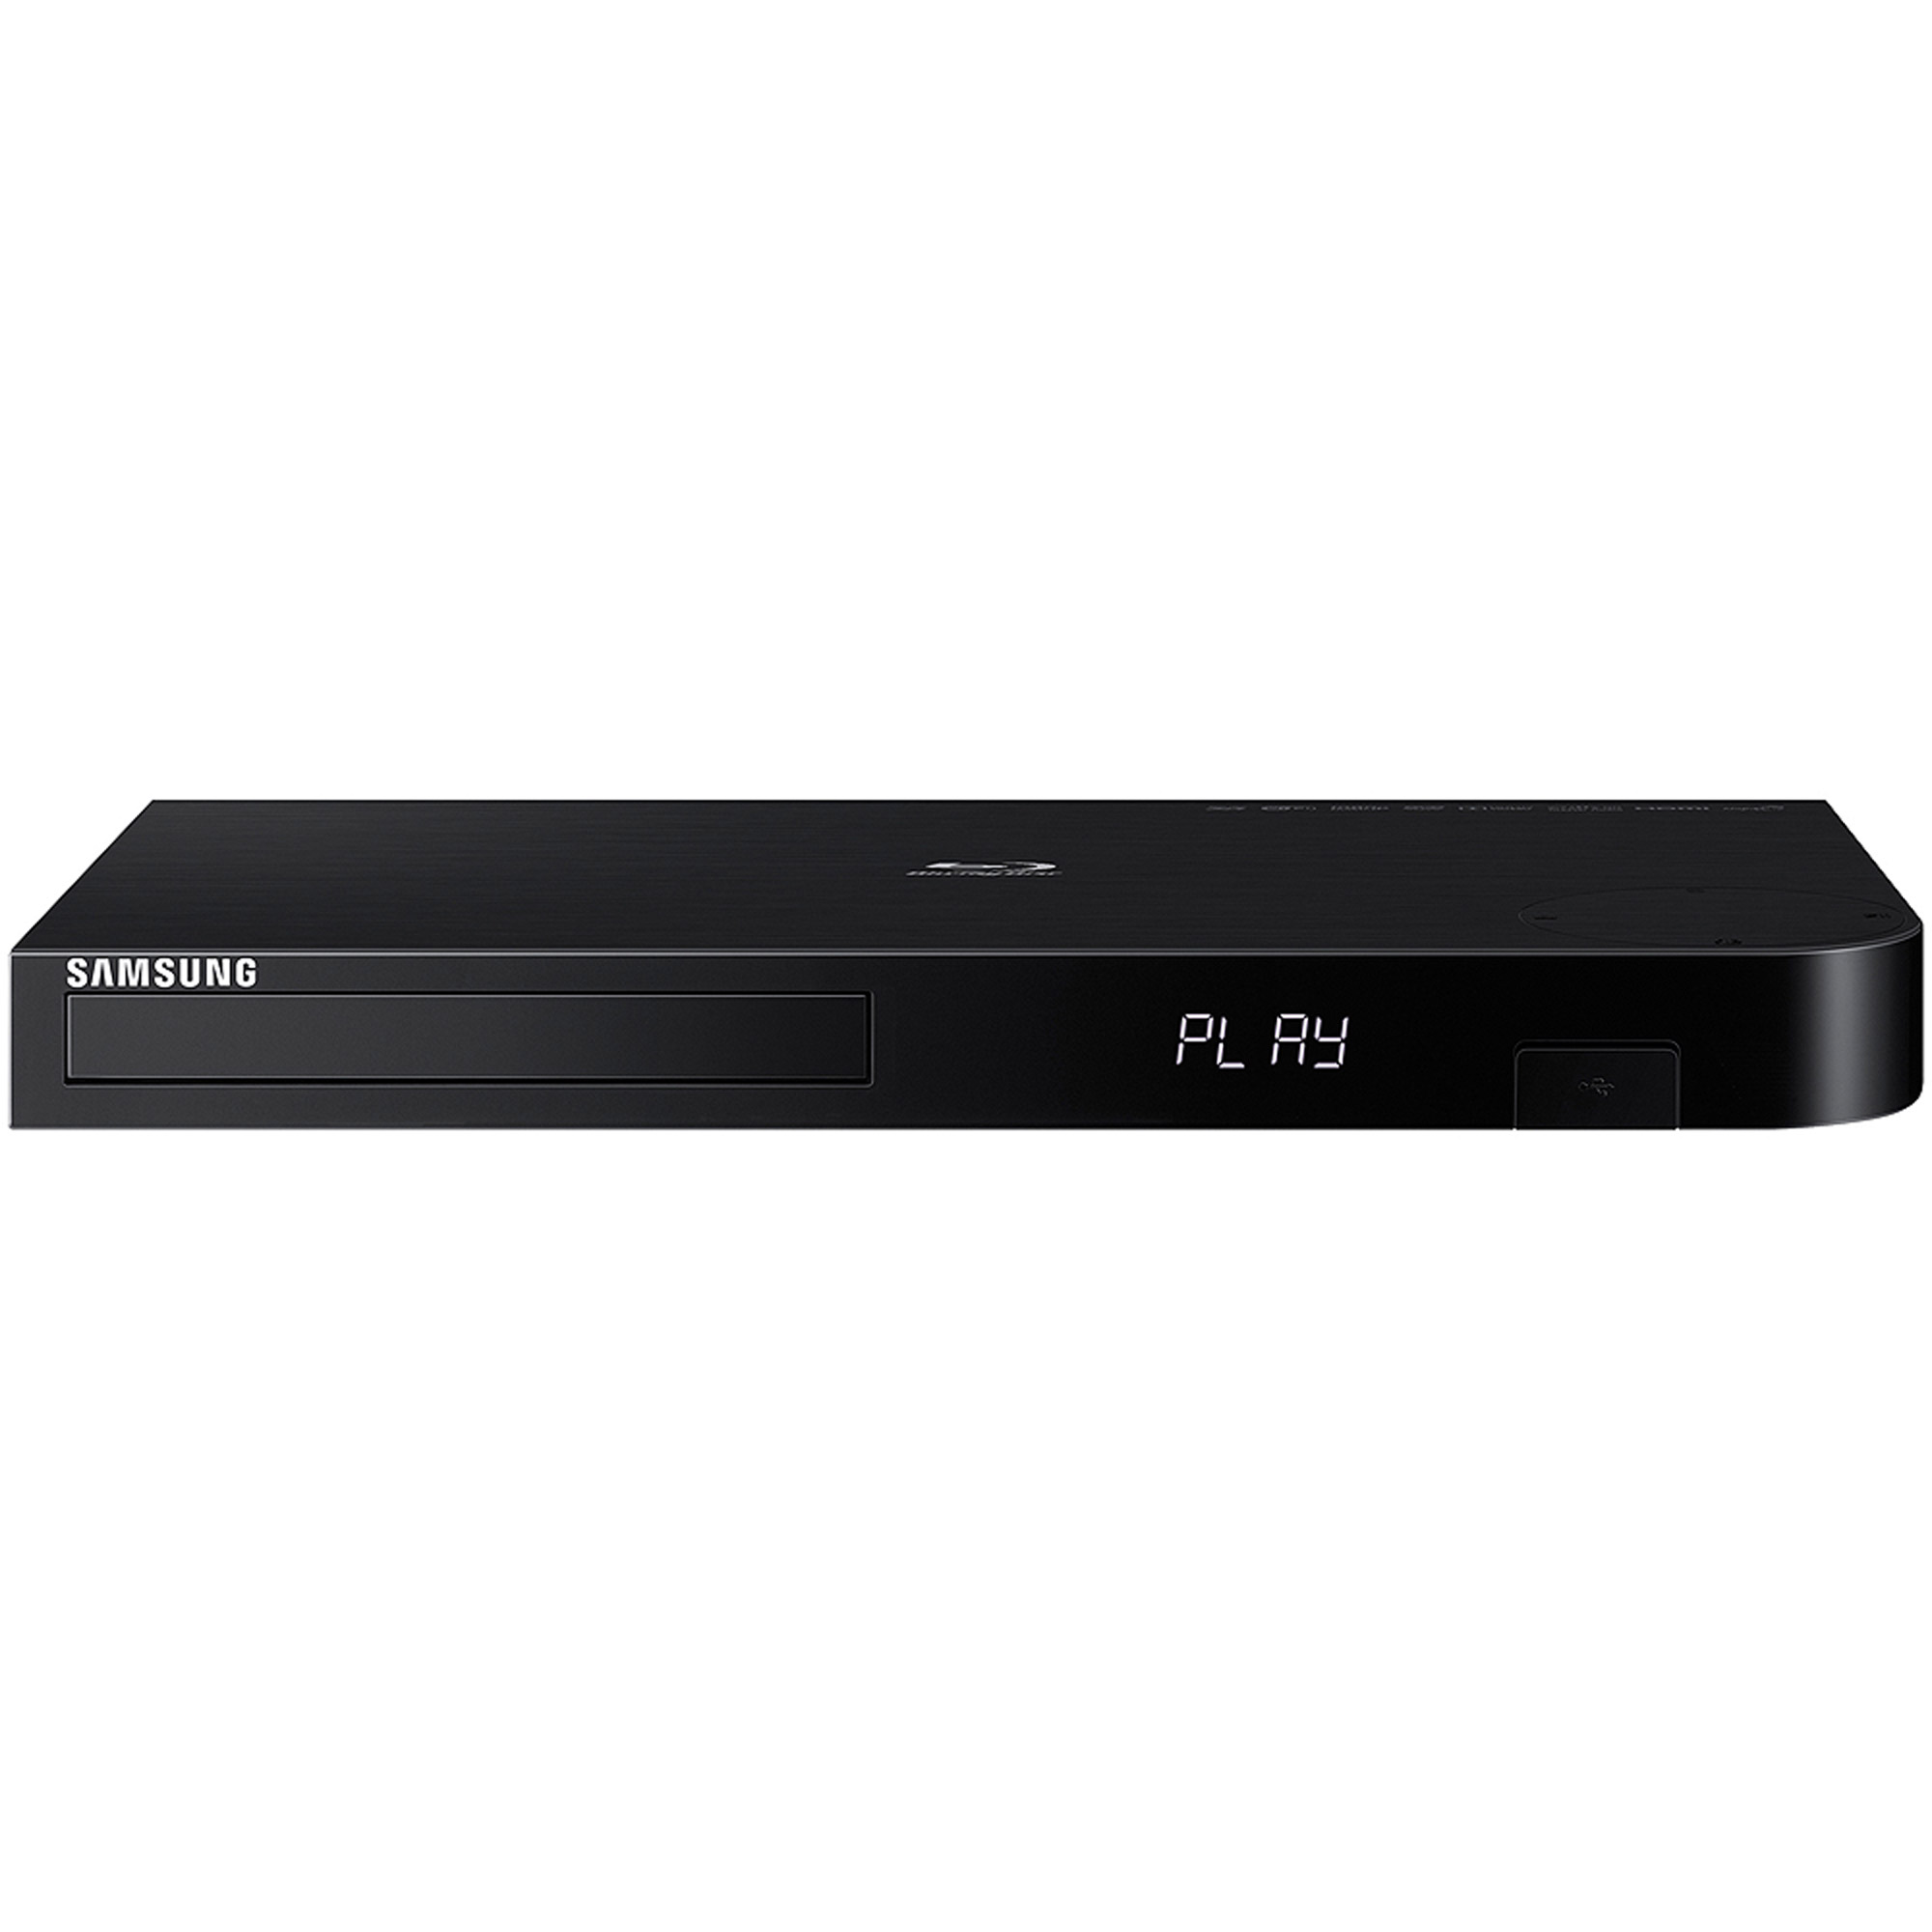 SAMSUNG Blu-ray & DVD Player with 4K UHD Upscaling, WiFi Streaming - BD-JM63 - image 1 of 4